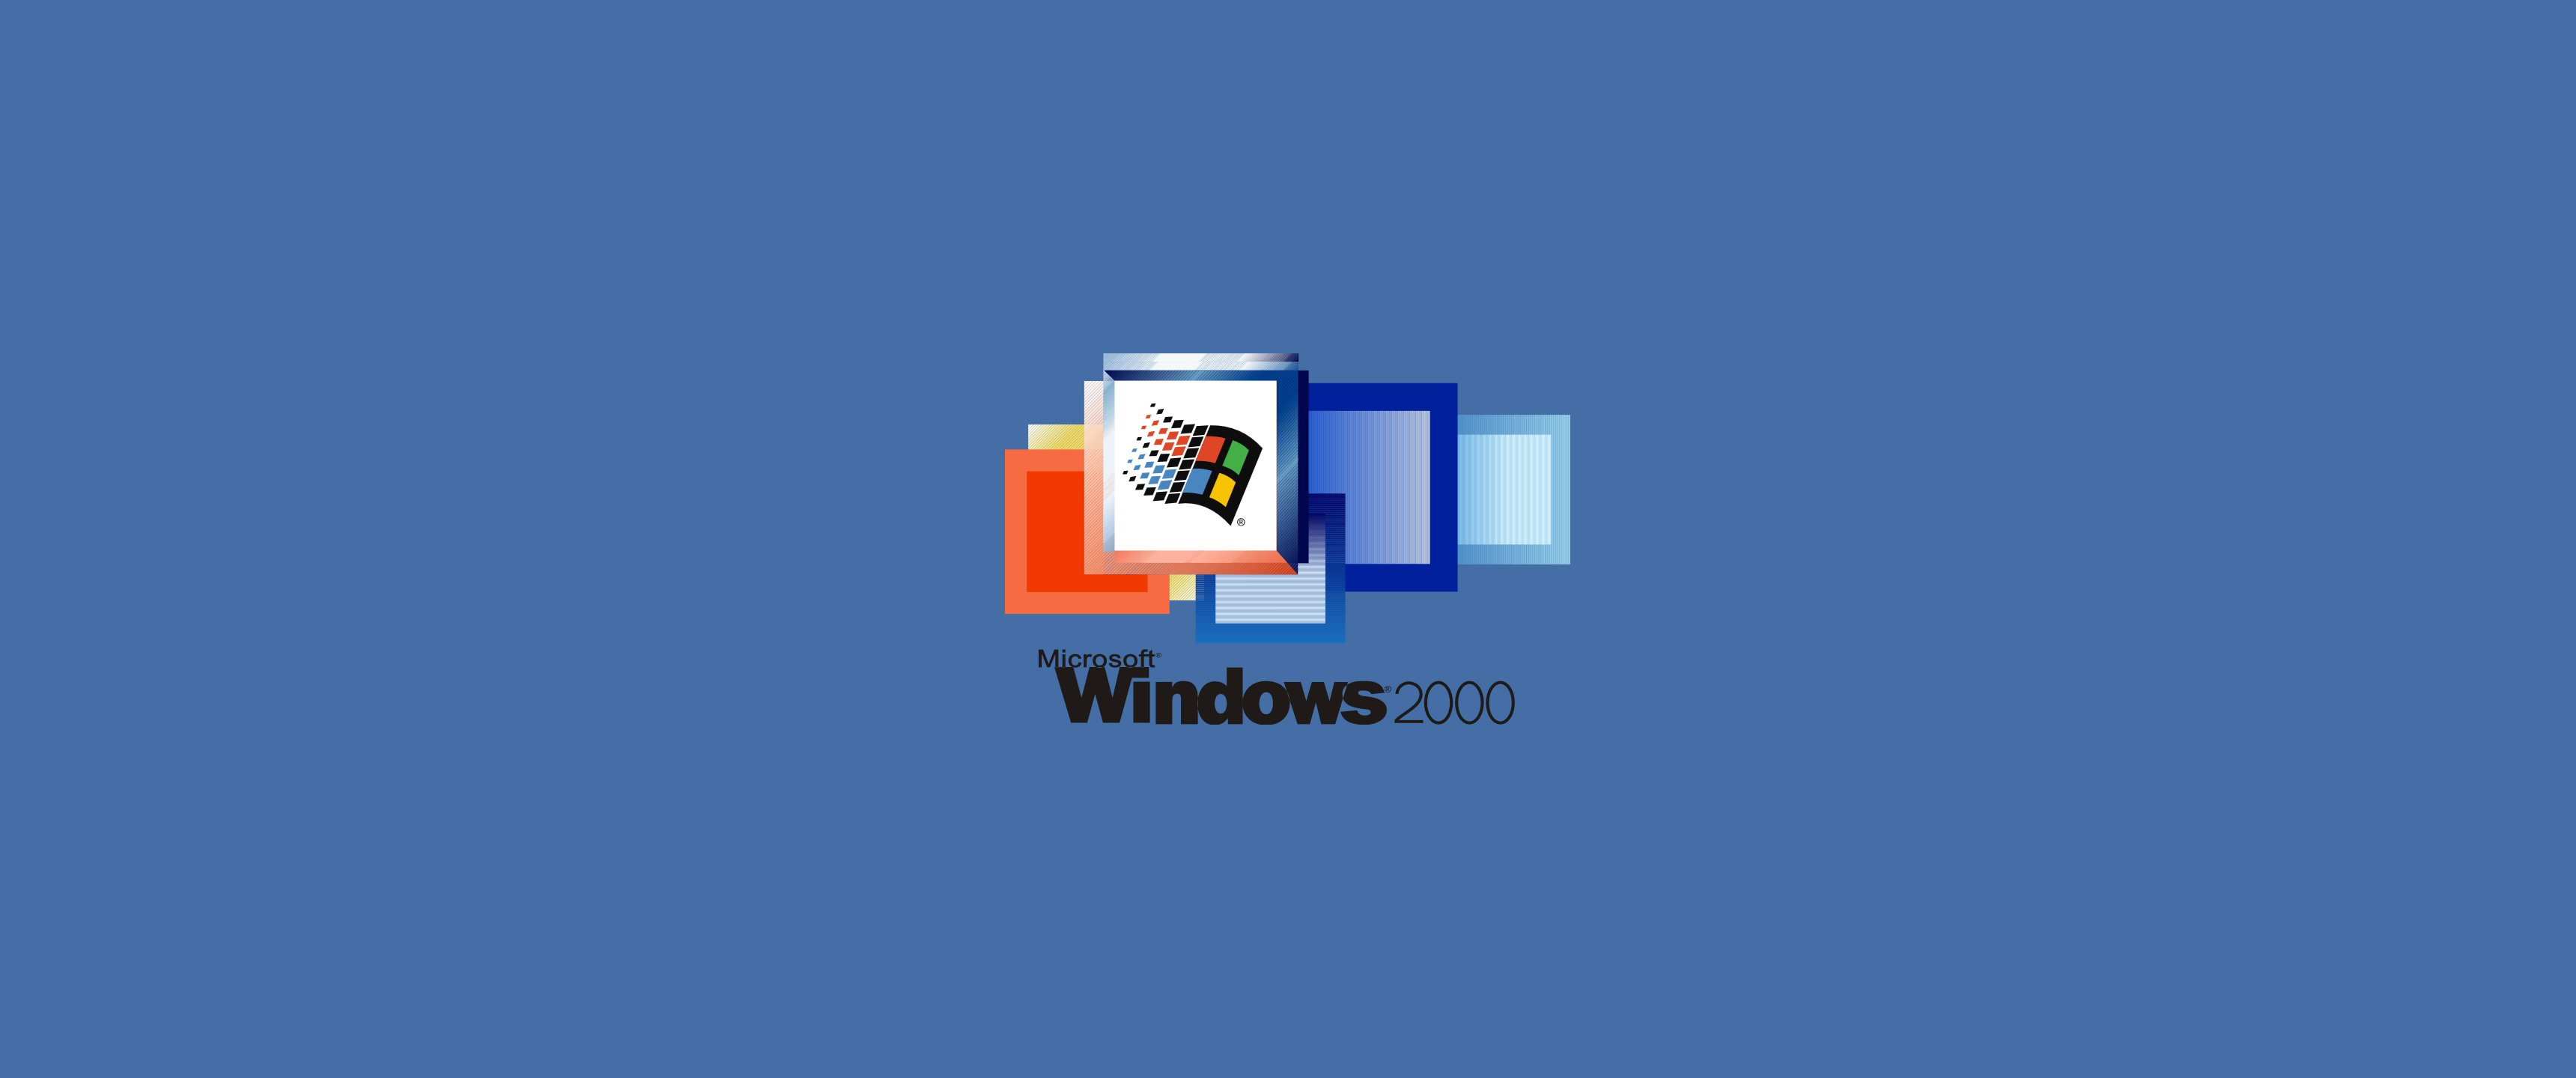 Фото бесплатно Windows, Microsoft, минимализм